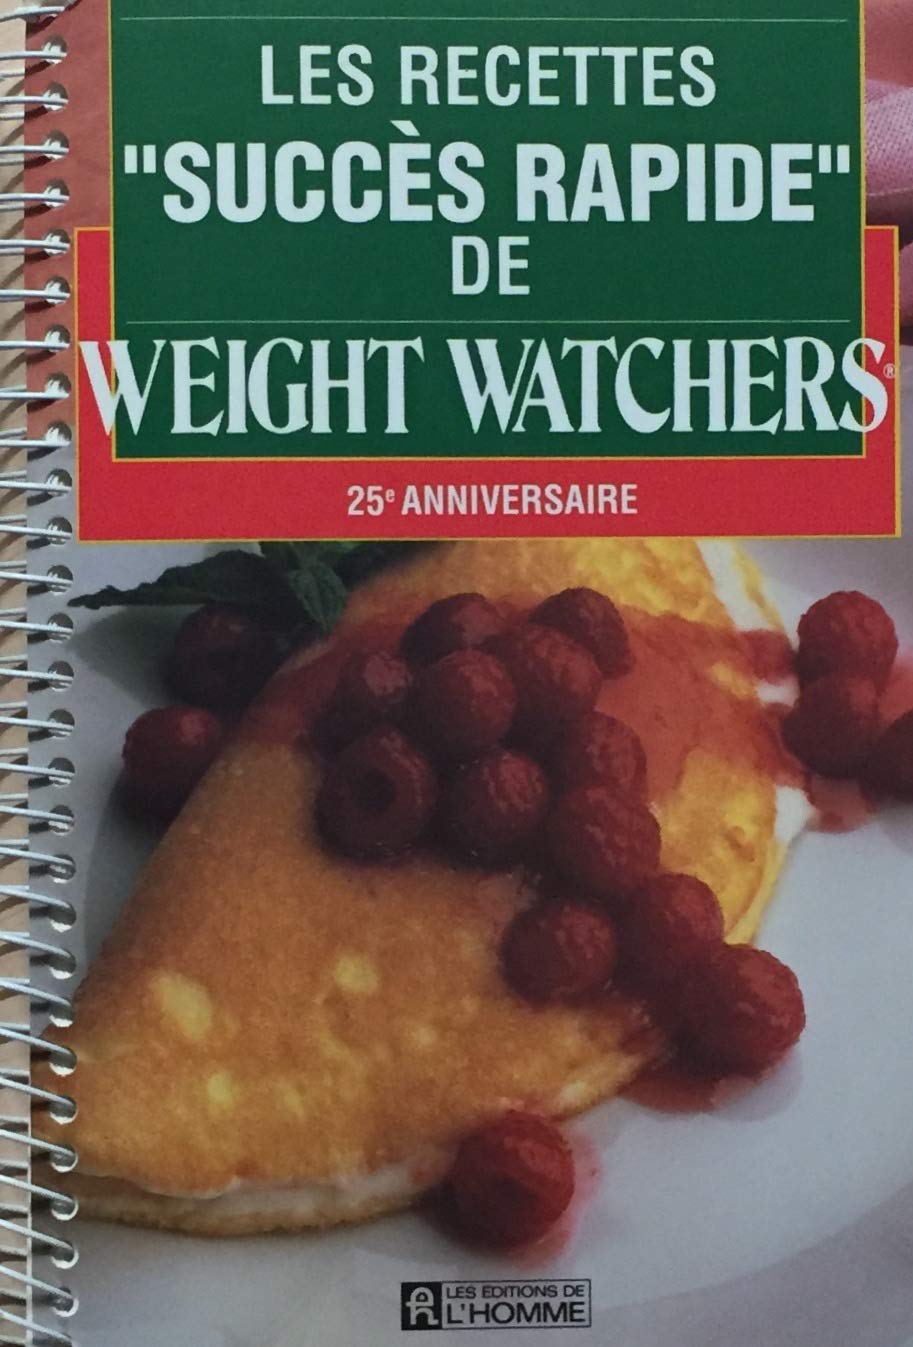 Livre ISBN 2761907256 Les recettes succès rapide de Weight Watchers (Weight Watchers)